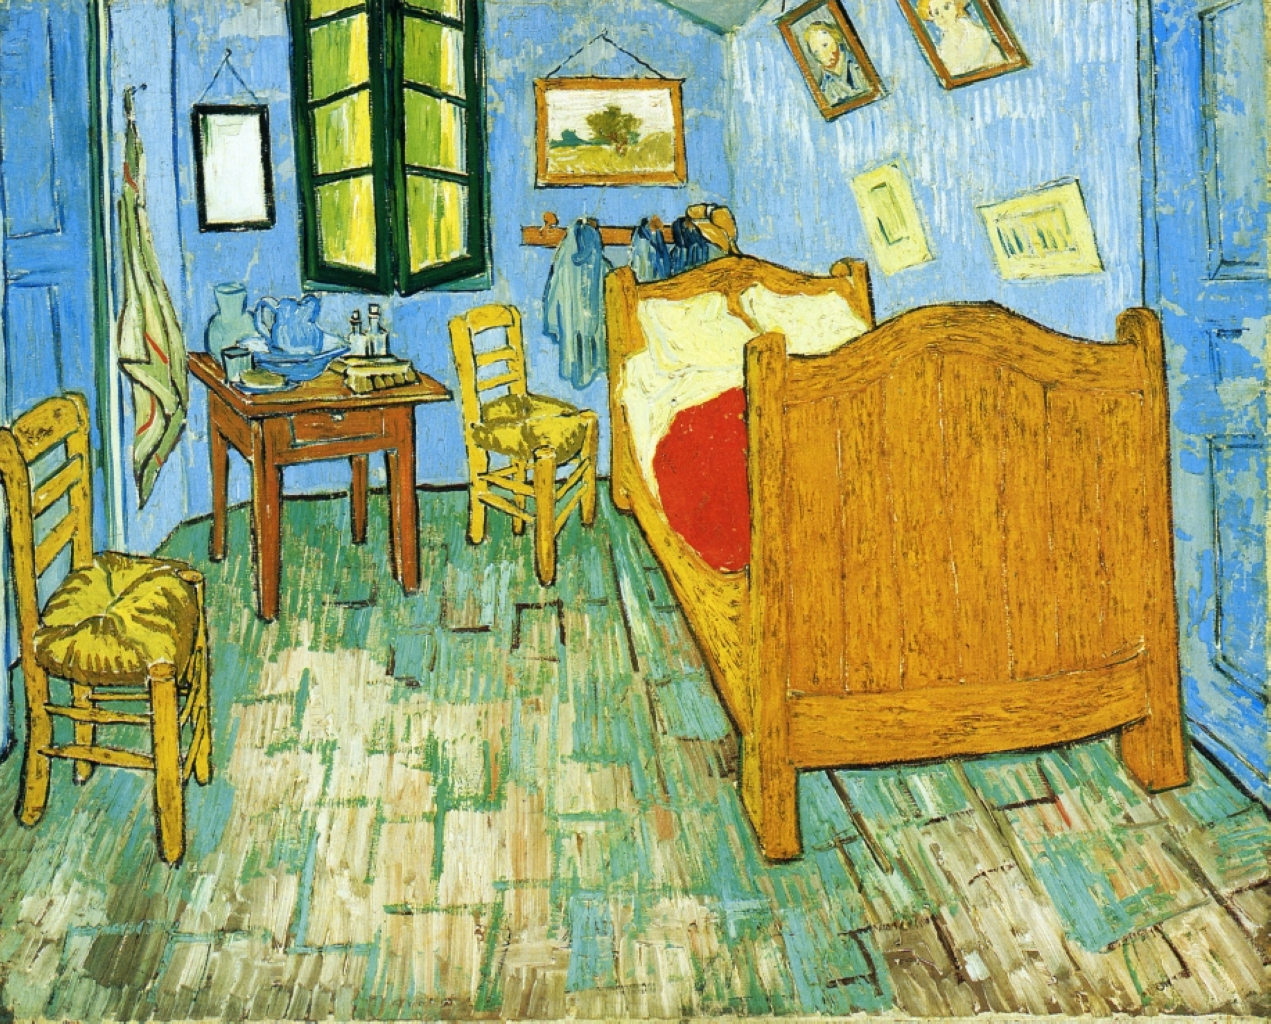 Vincent's Bedroom in Arles - Vincent van Gogh - WikiArt.org